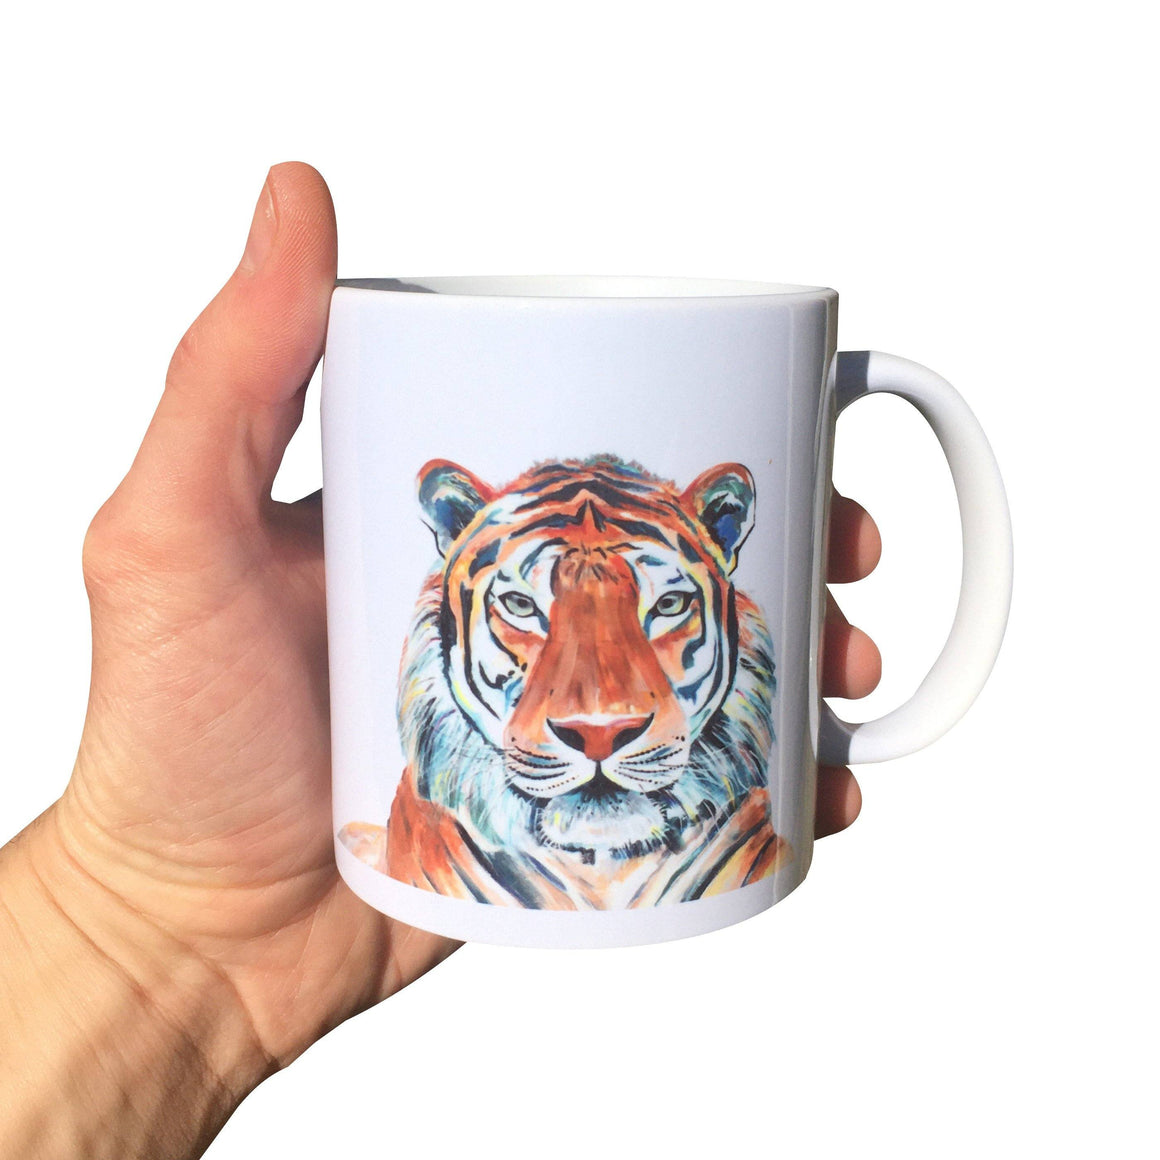 Painted Tiger Mug (Can be personalised)